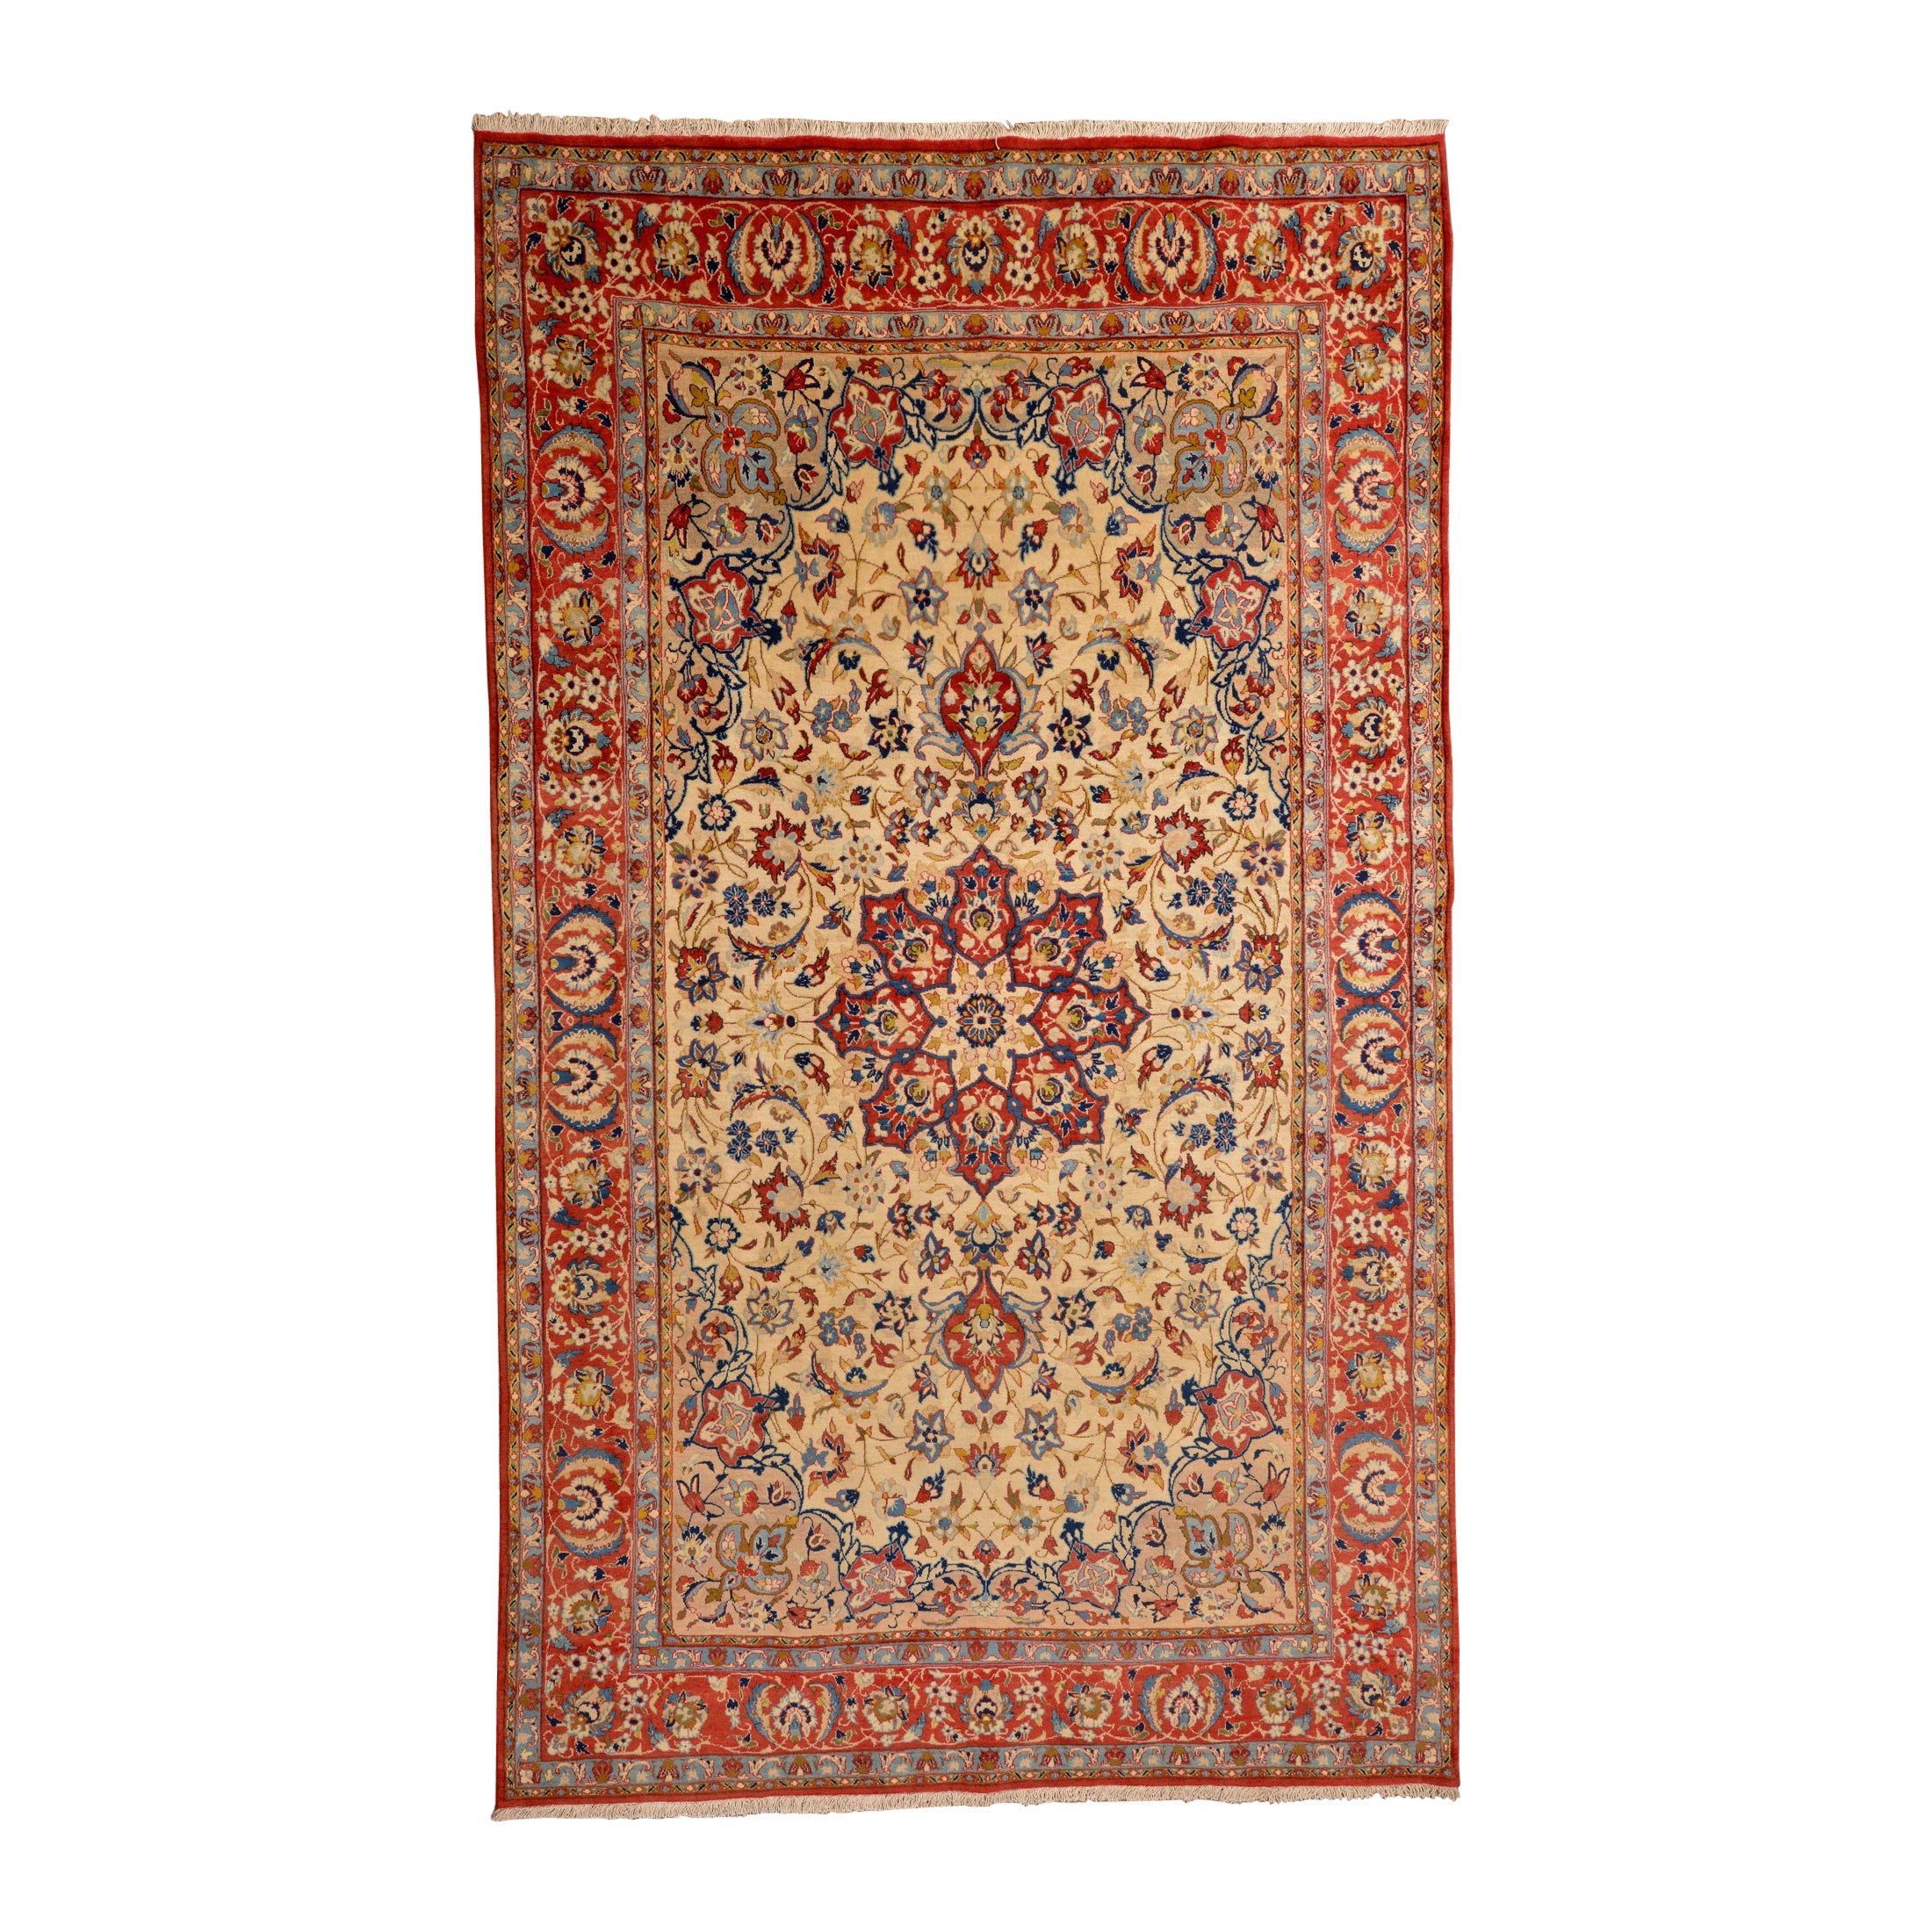 Large Classic Oriental Carpet